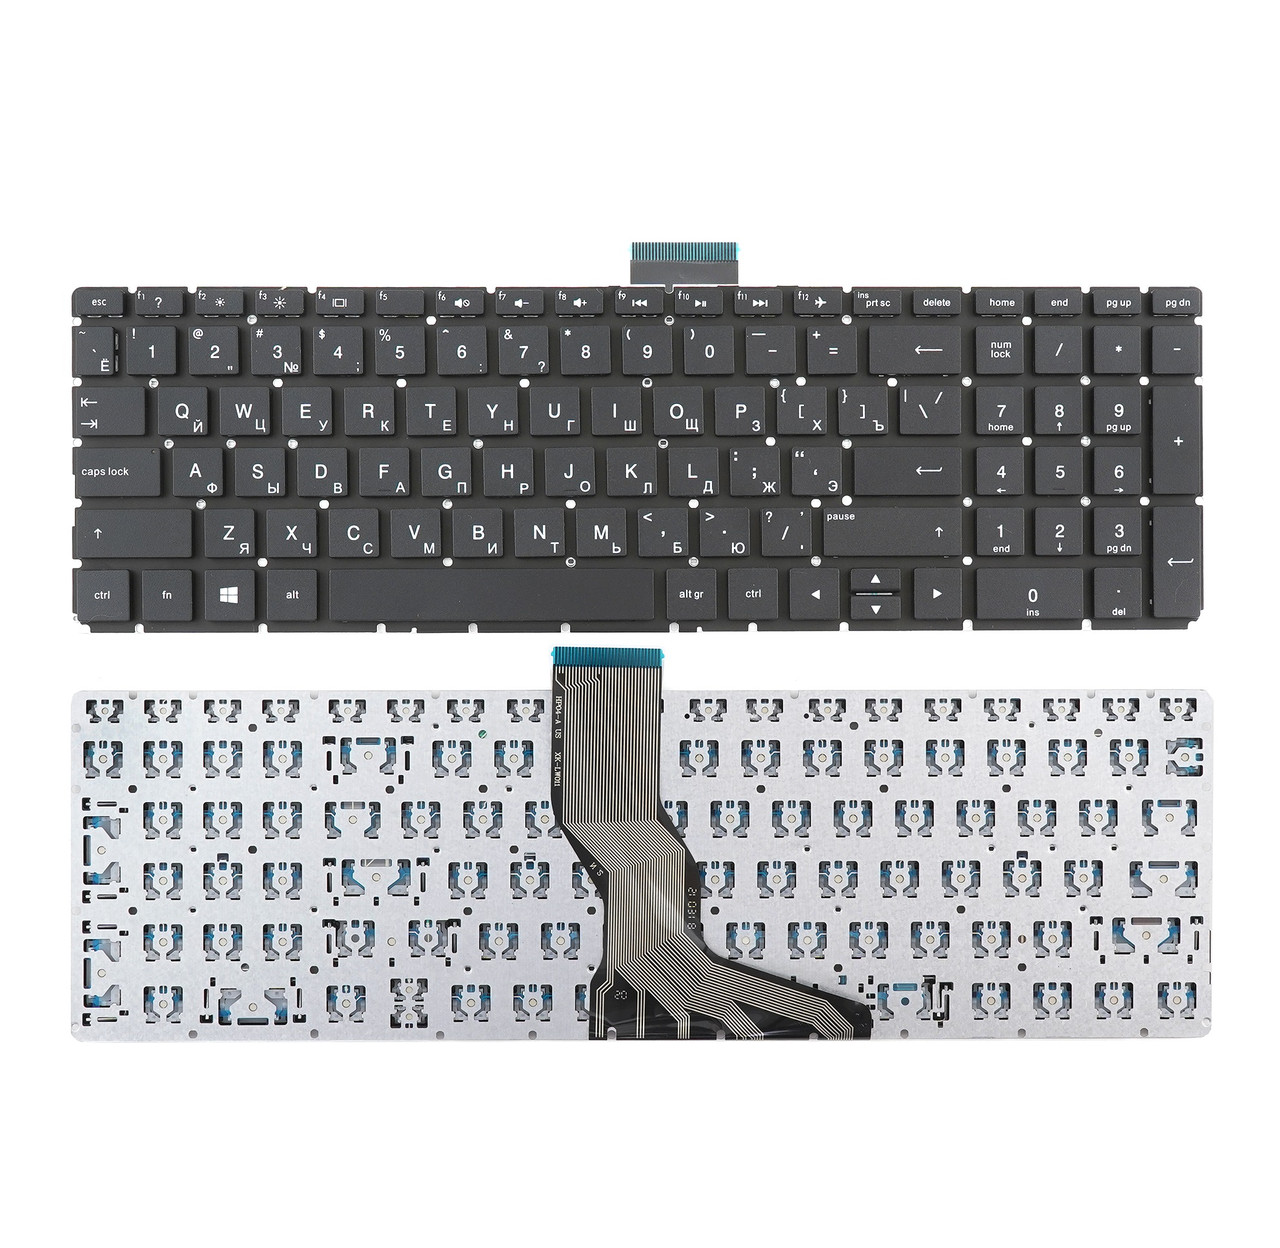 Клавиатура для ноутбука серий HP Pavilion 17-BS, 17G-BR